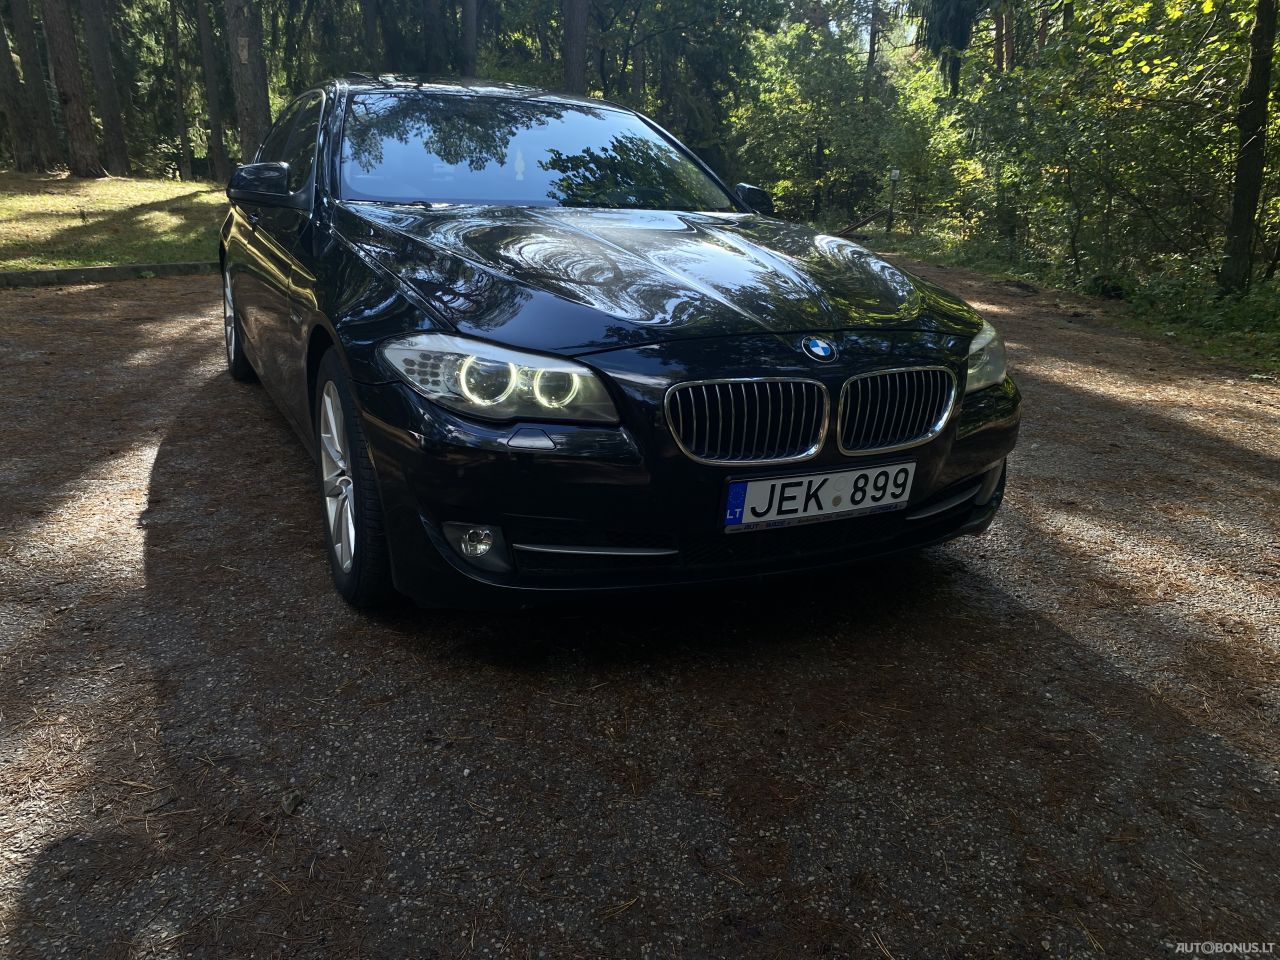 BMW 530, 3.0 l., Седан